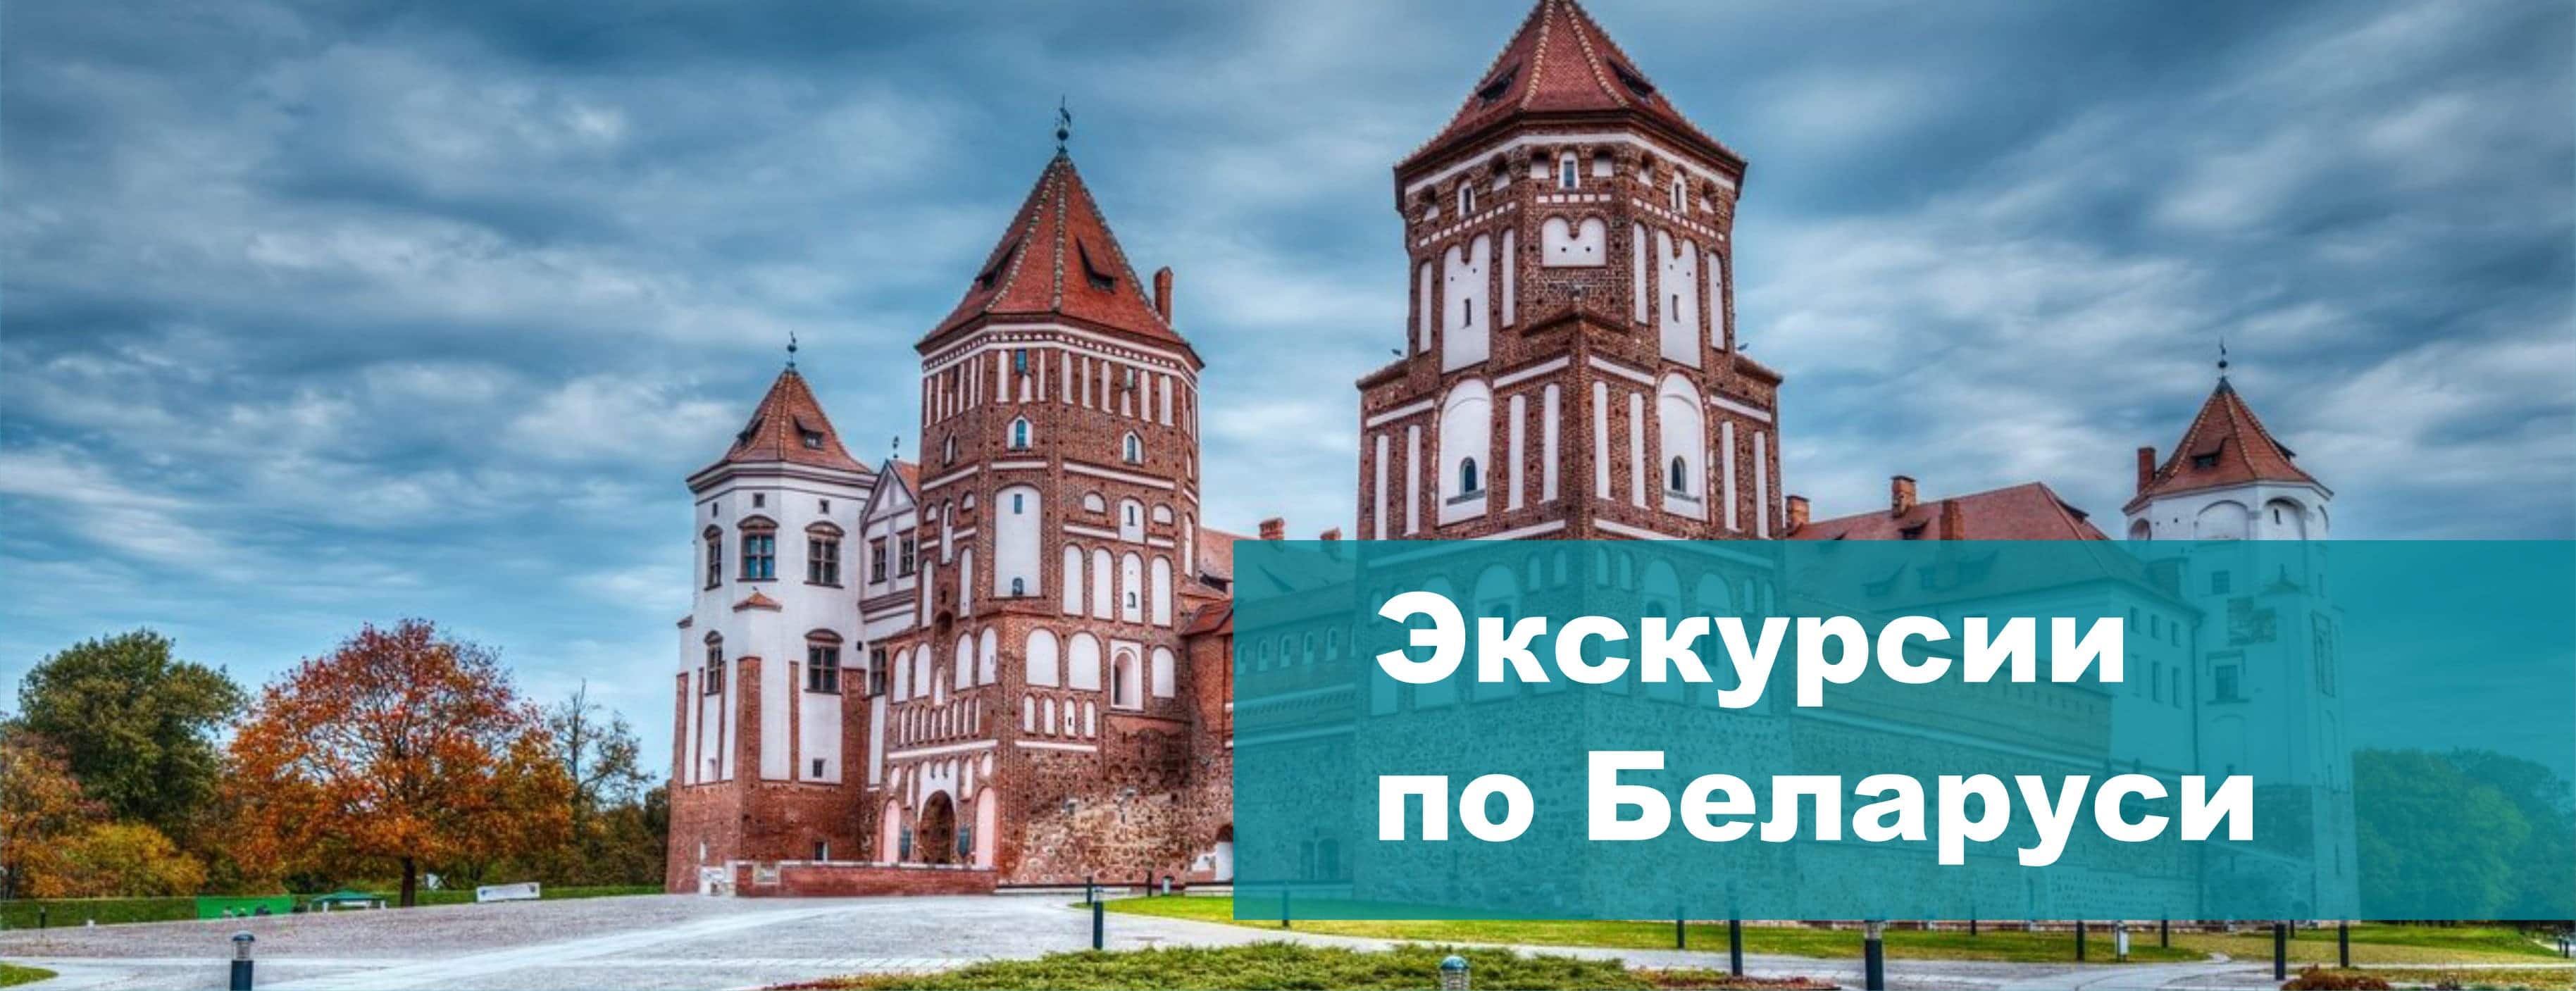 Виртуальная экскурсия по Беларуси